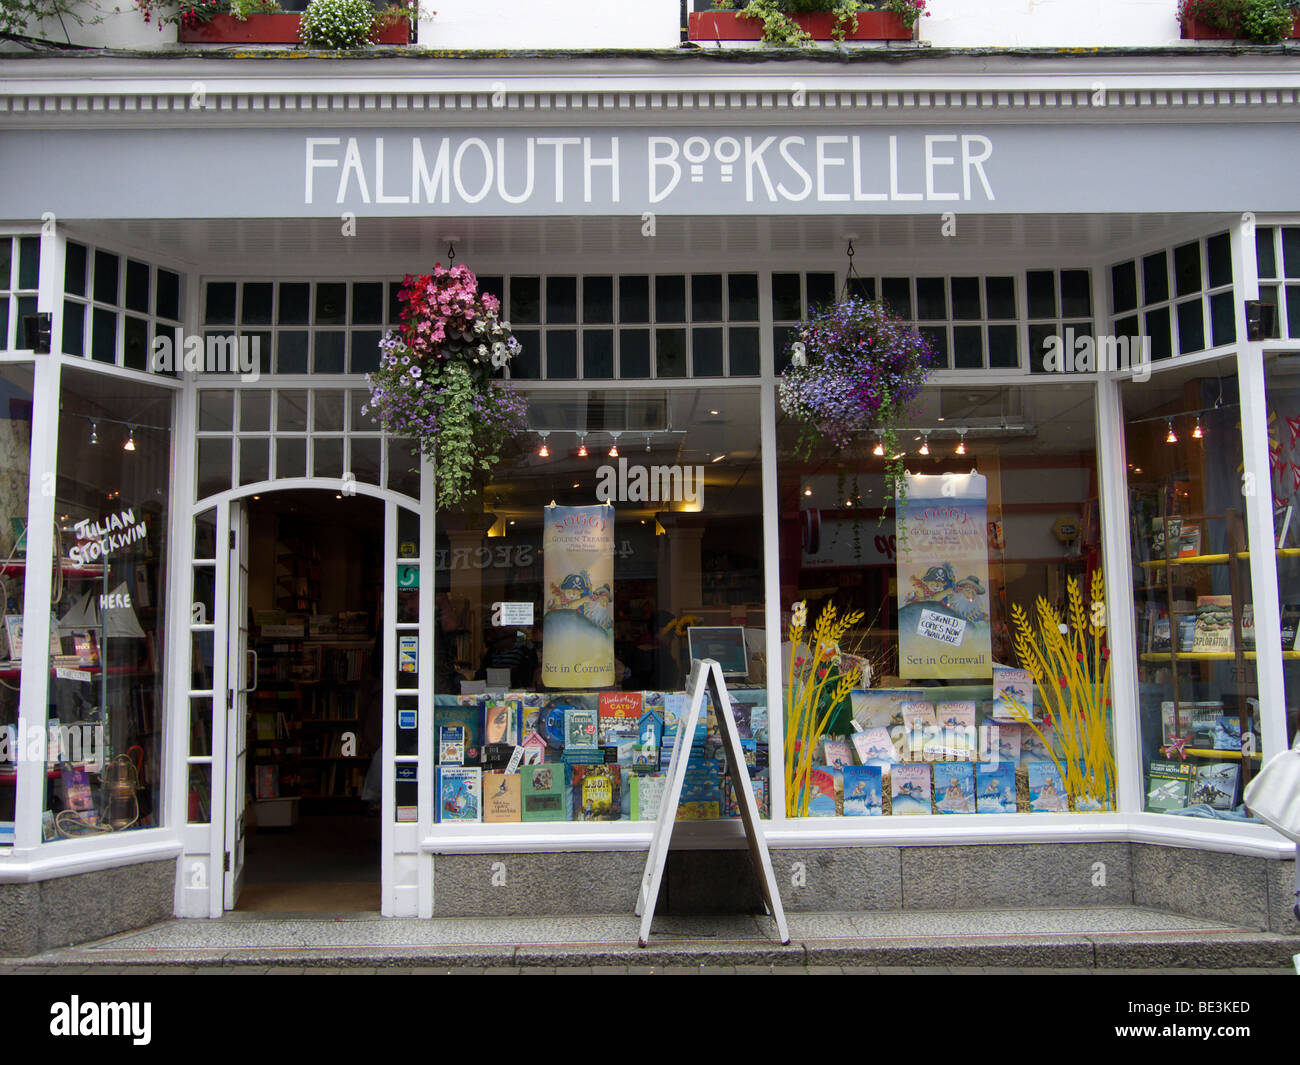 Falmouth Cornwall england UK The Falmouth Bookseller Stock Photo